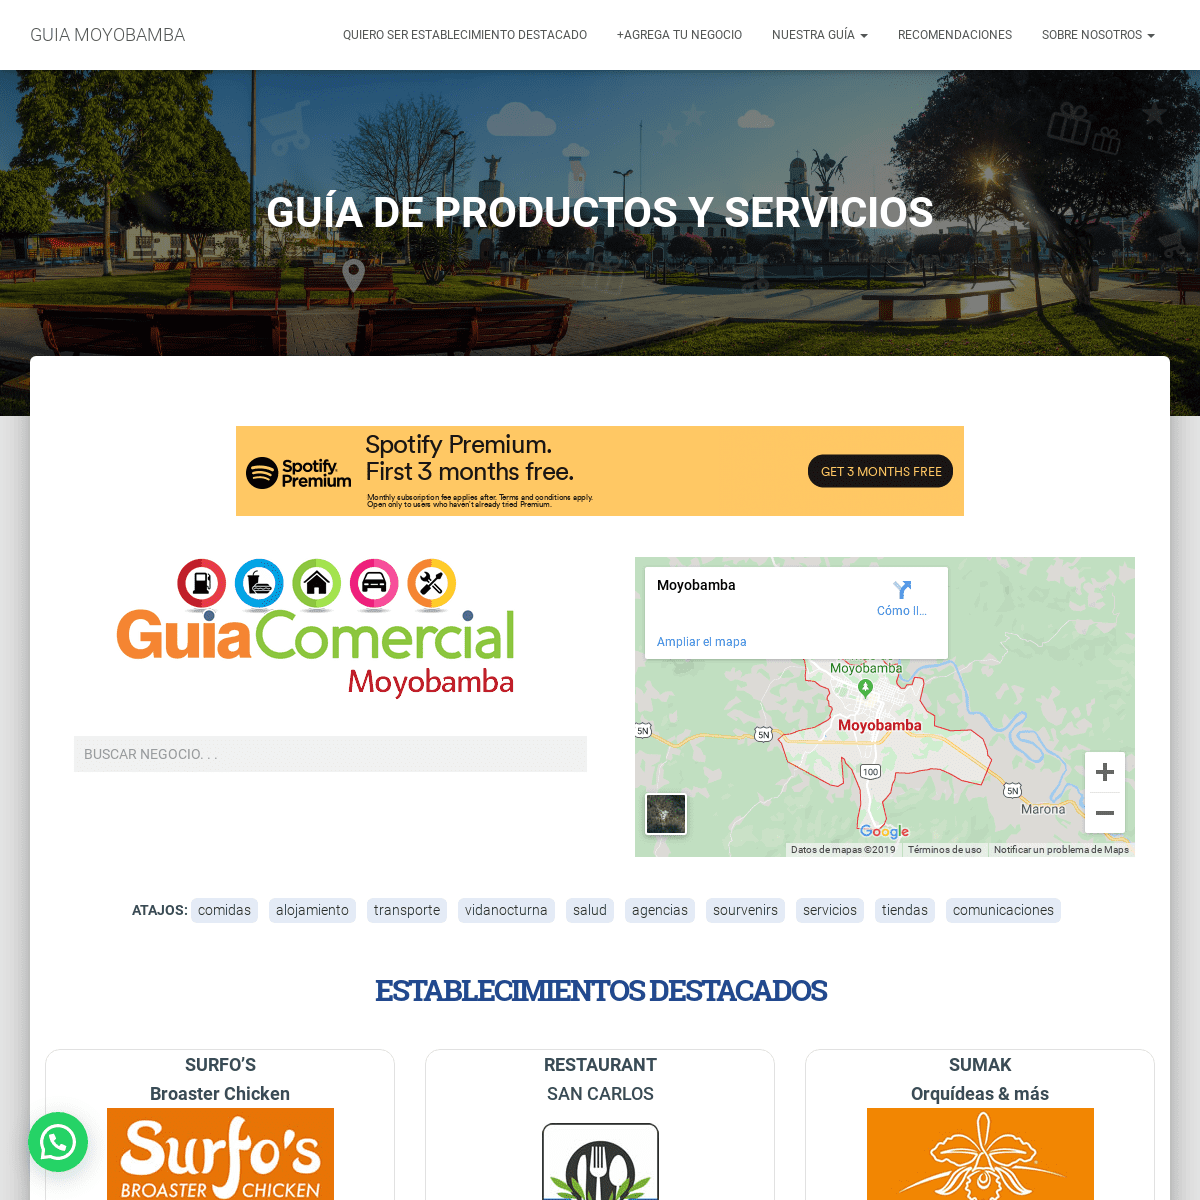 A complete backup of moyobamba.com